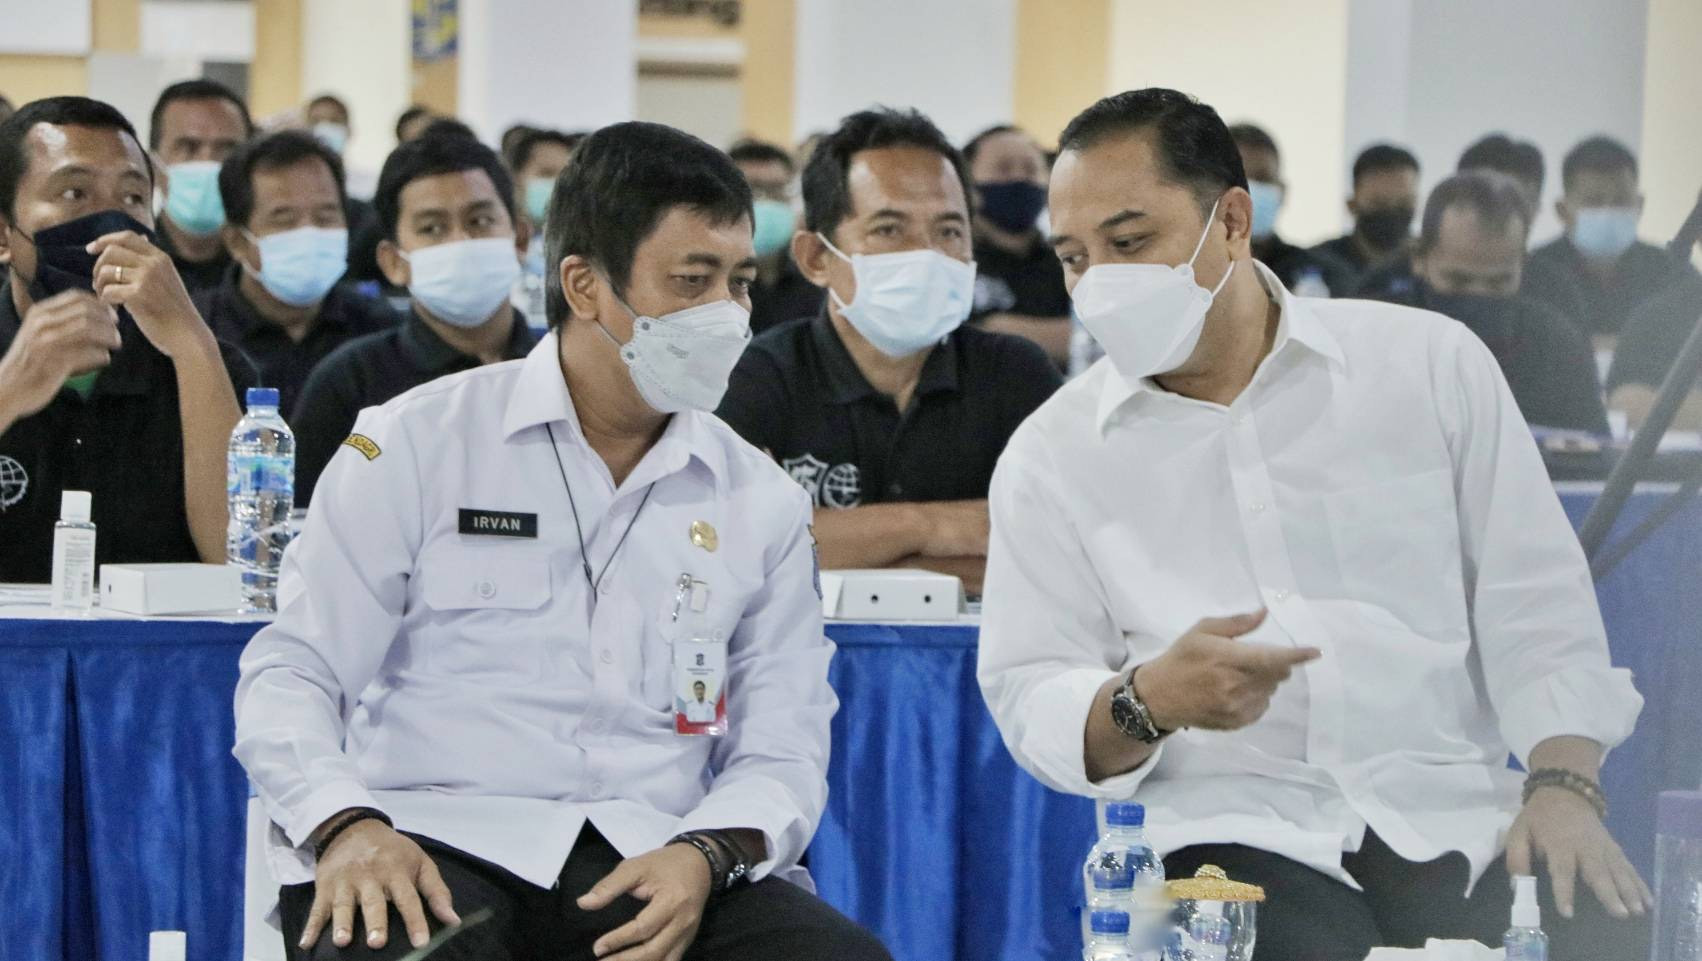 Gaji Pegawai Dishub Bandung 2019 / Dinas Perhubungan Buka Lowongan Kerja Bergaji Rp 2 5 Juta Per ...